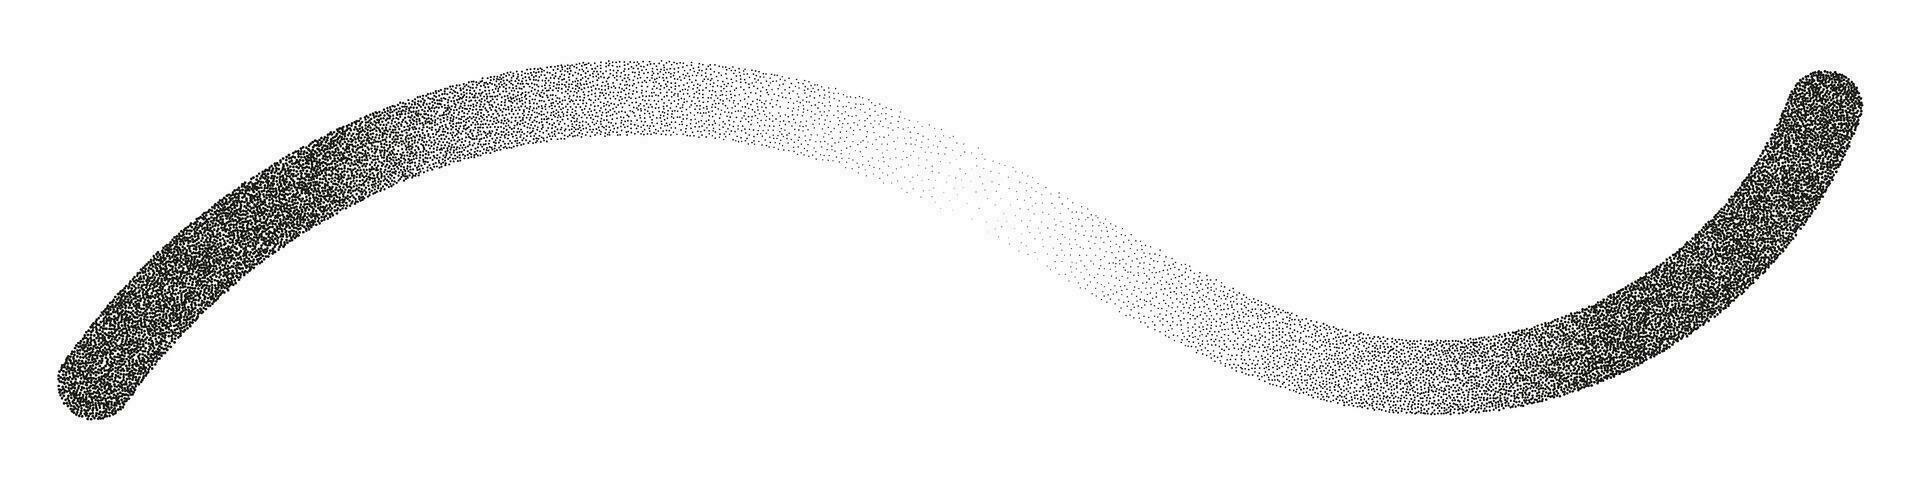 grobkörnig Textur Sand auf transparent hintergrund.monochrom Lärm Halbton, Streugut Muster.Vektor isoliert Illustration vektor